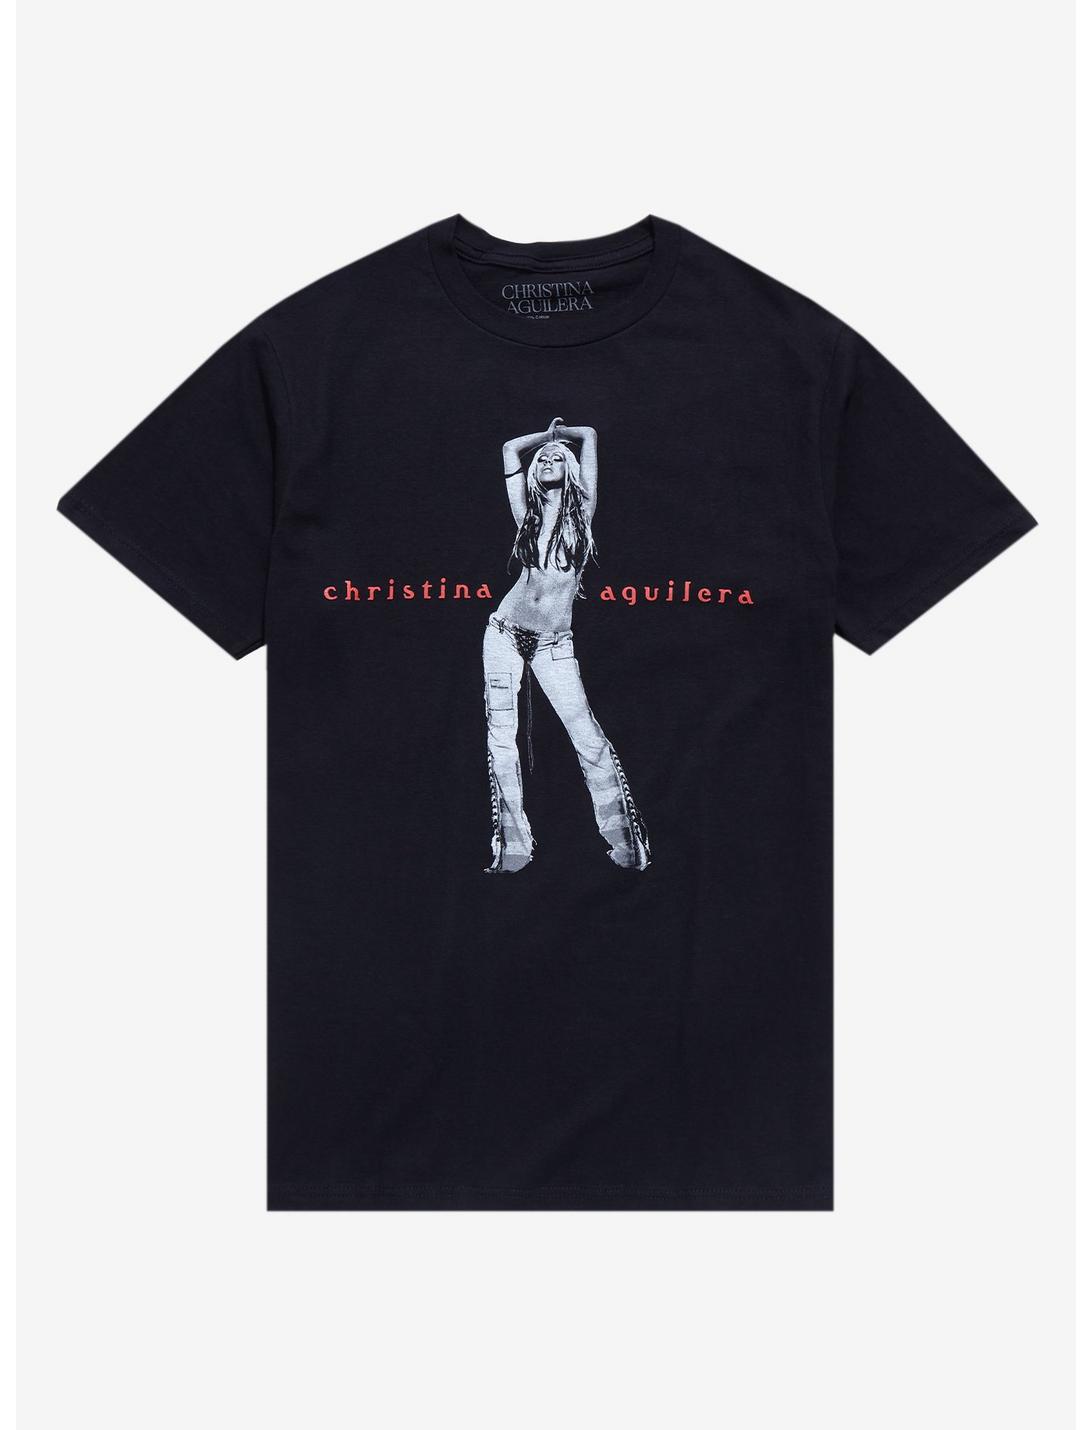 Christina Aguilera Stripped Album Cover T-Shirt, BLACK, hi-res